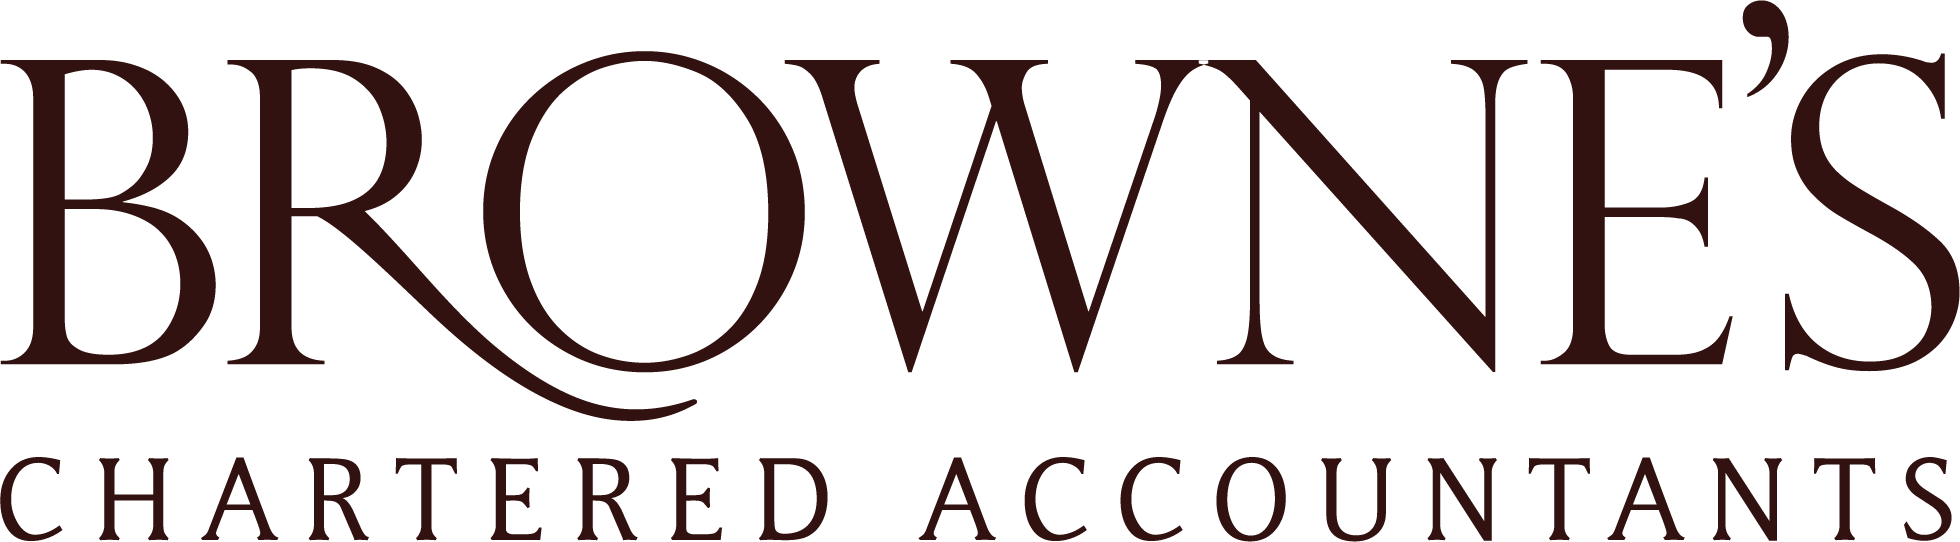 Browne's Chartered Accountants logo